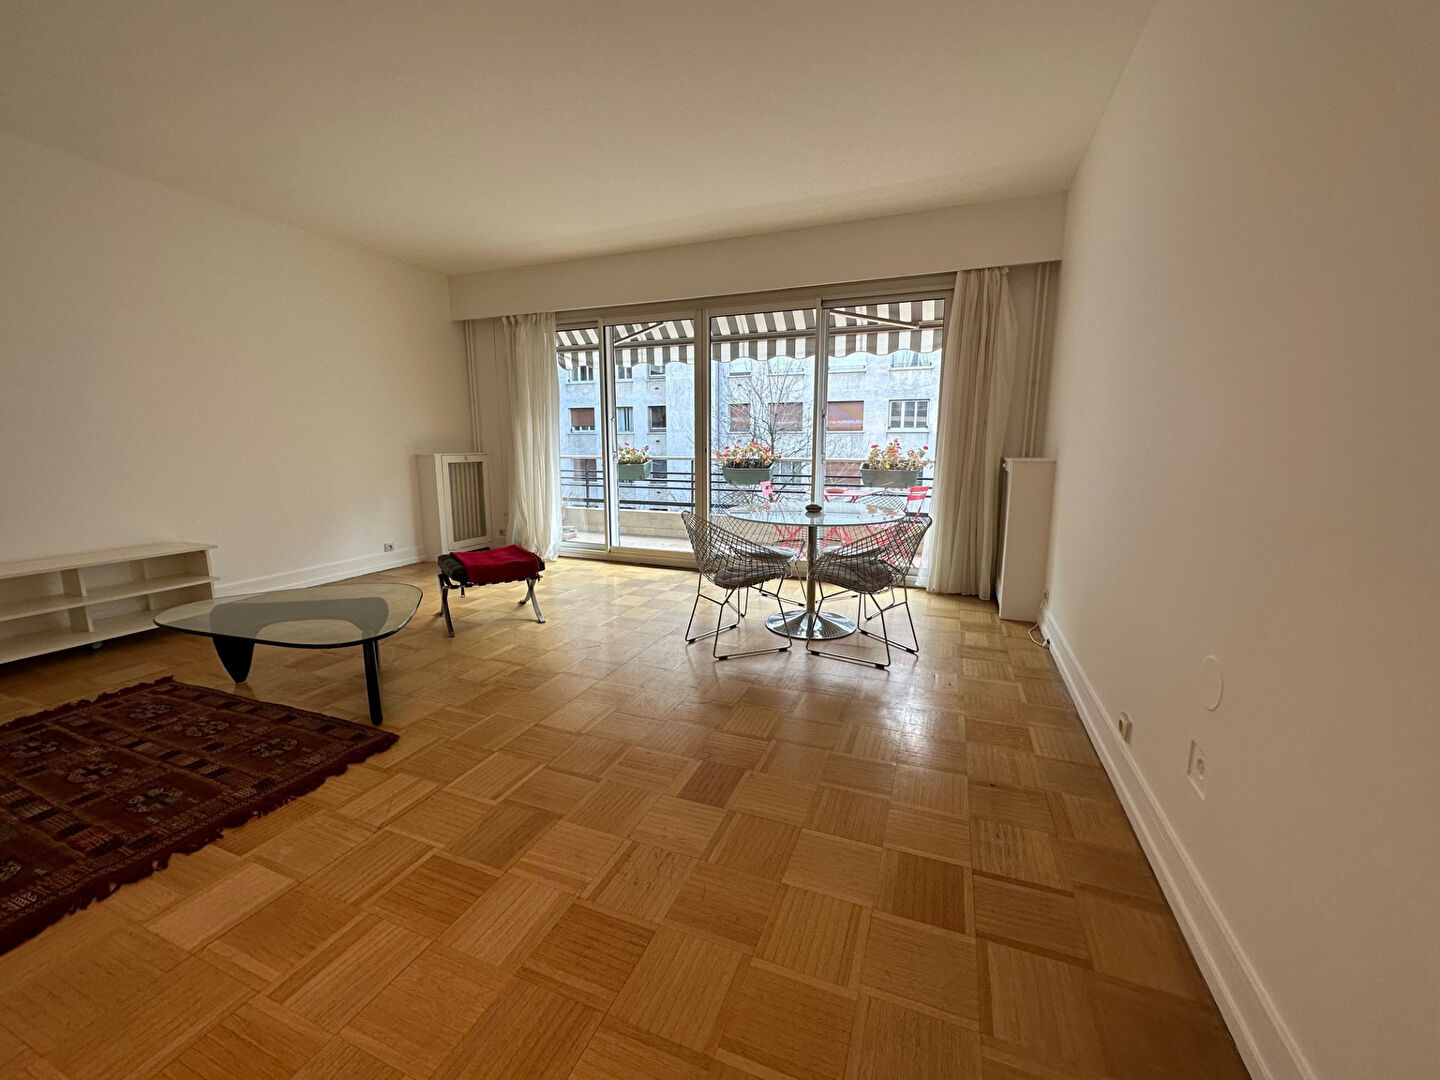 Appartement a louer neuilly-sur-seine - 2 pièce(s) - 64.22 m2 - Surfyn